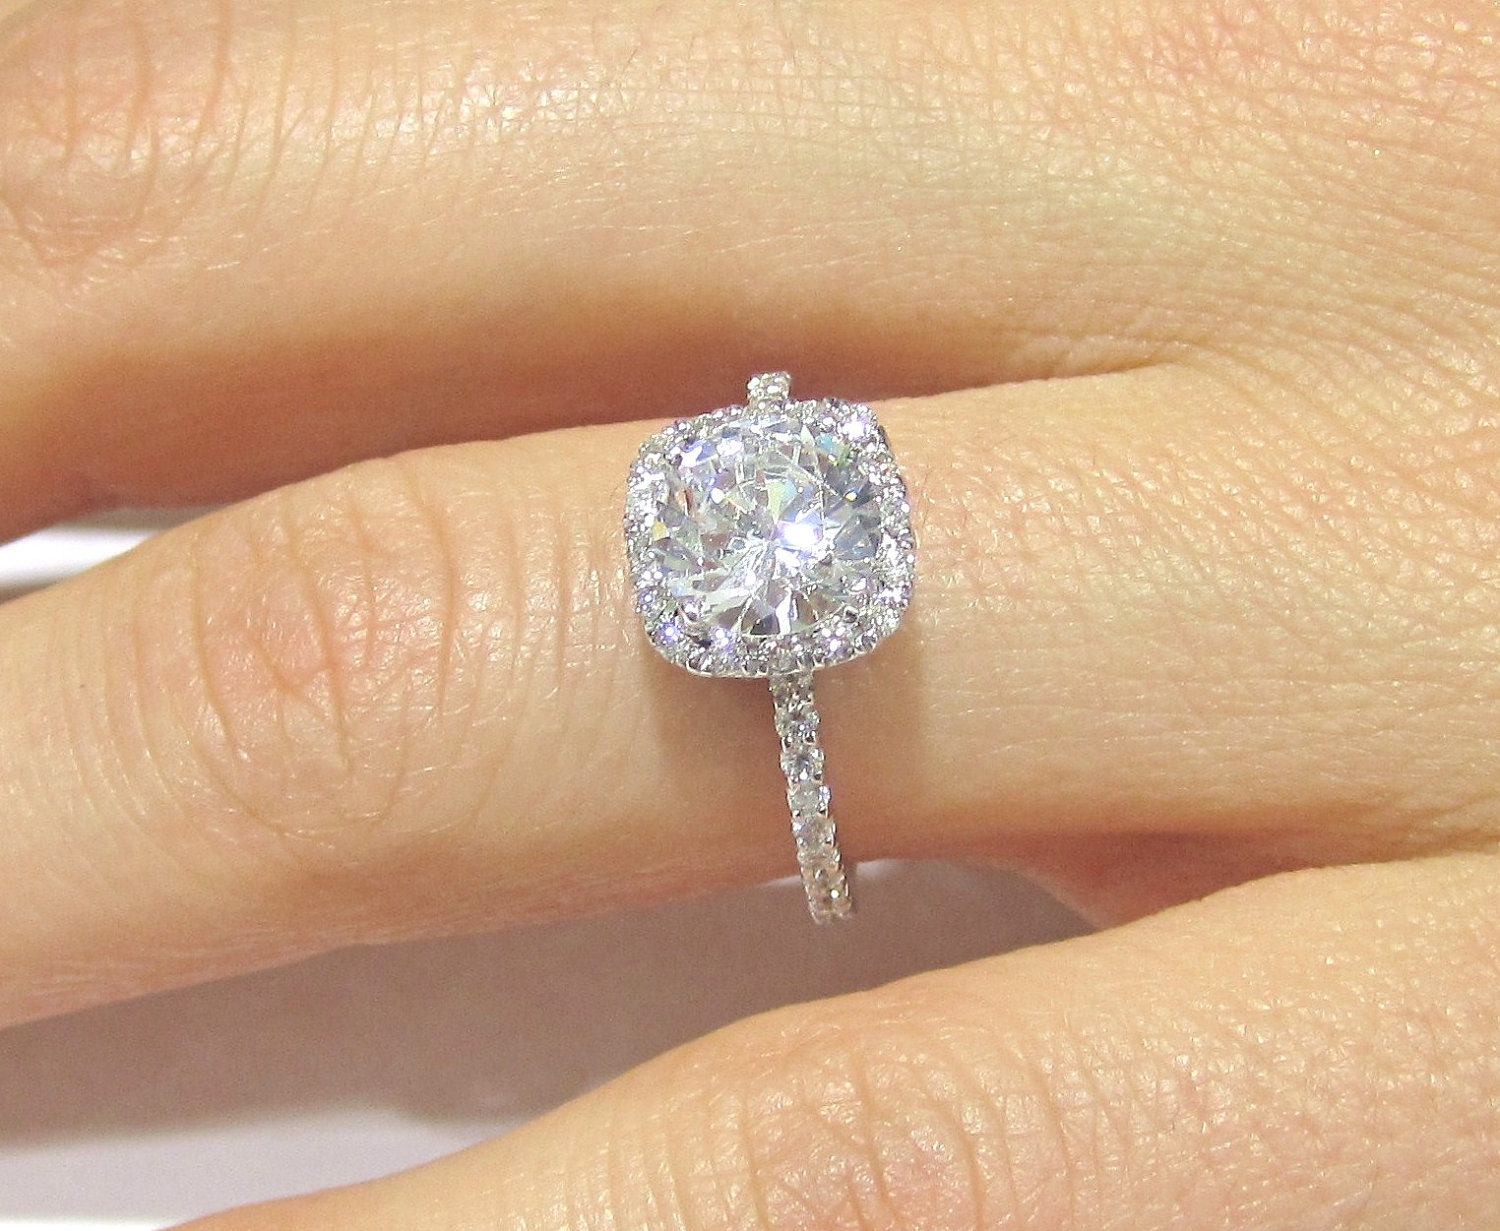 Diamond Engagement Ring Wallpapers, Diamond Engagement - Square Diamond Engagement Ring On Finger - HD Wallpaper 